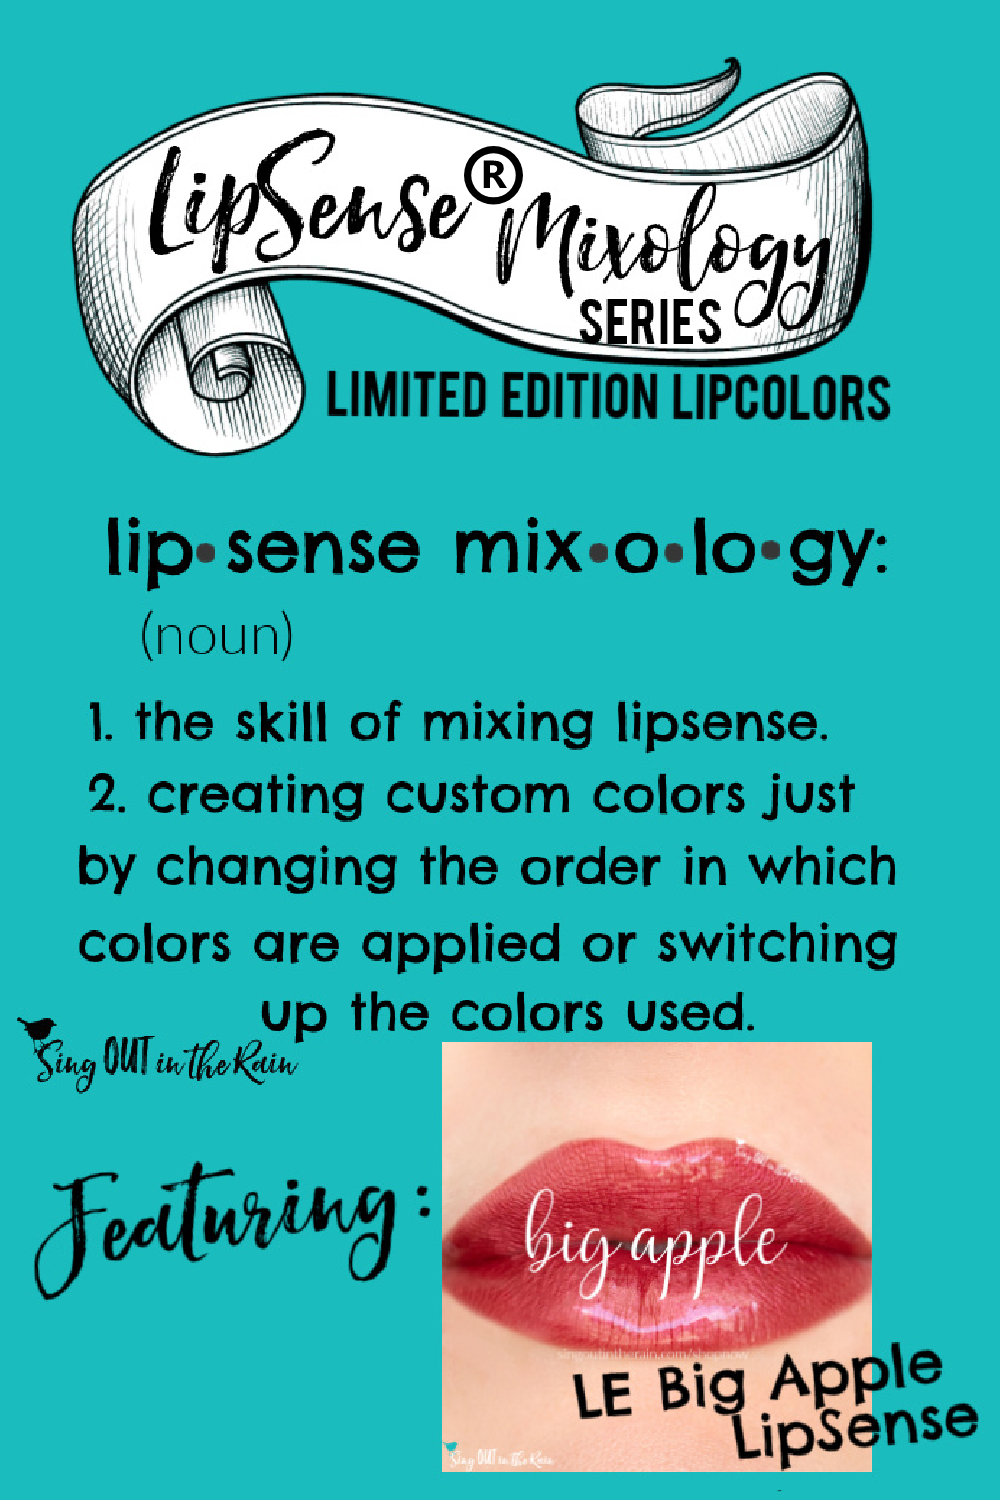 The Ultimate Guide to Big Apple LipSense Mixology